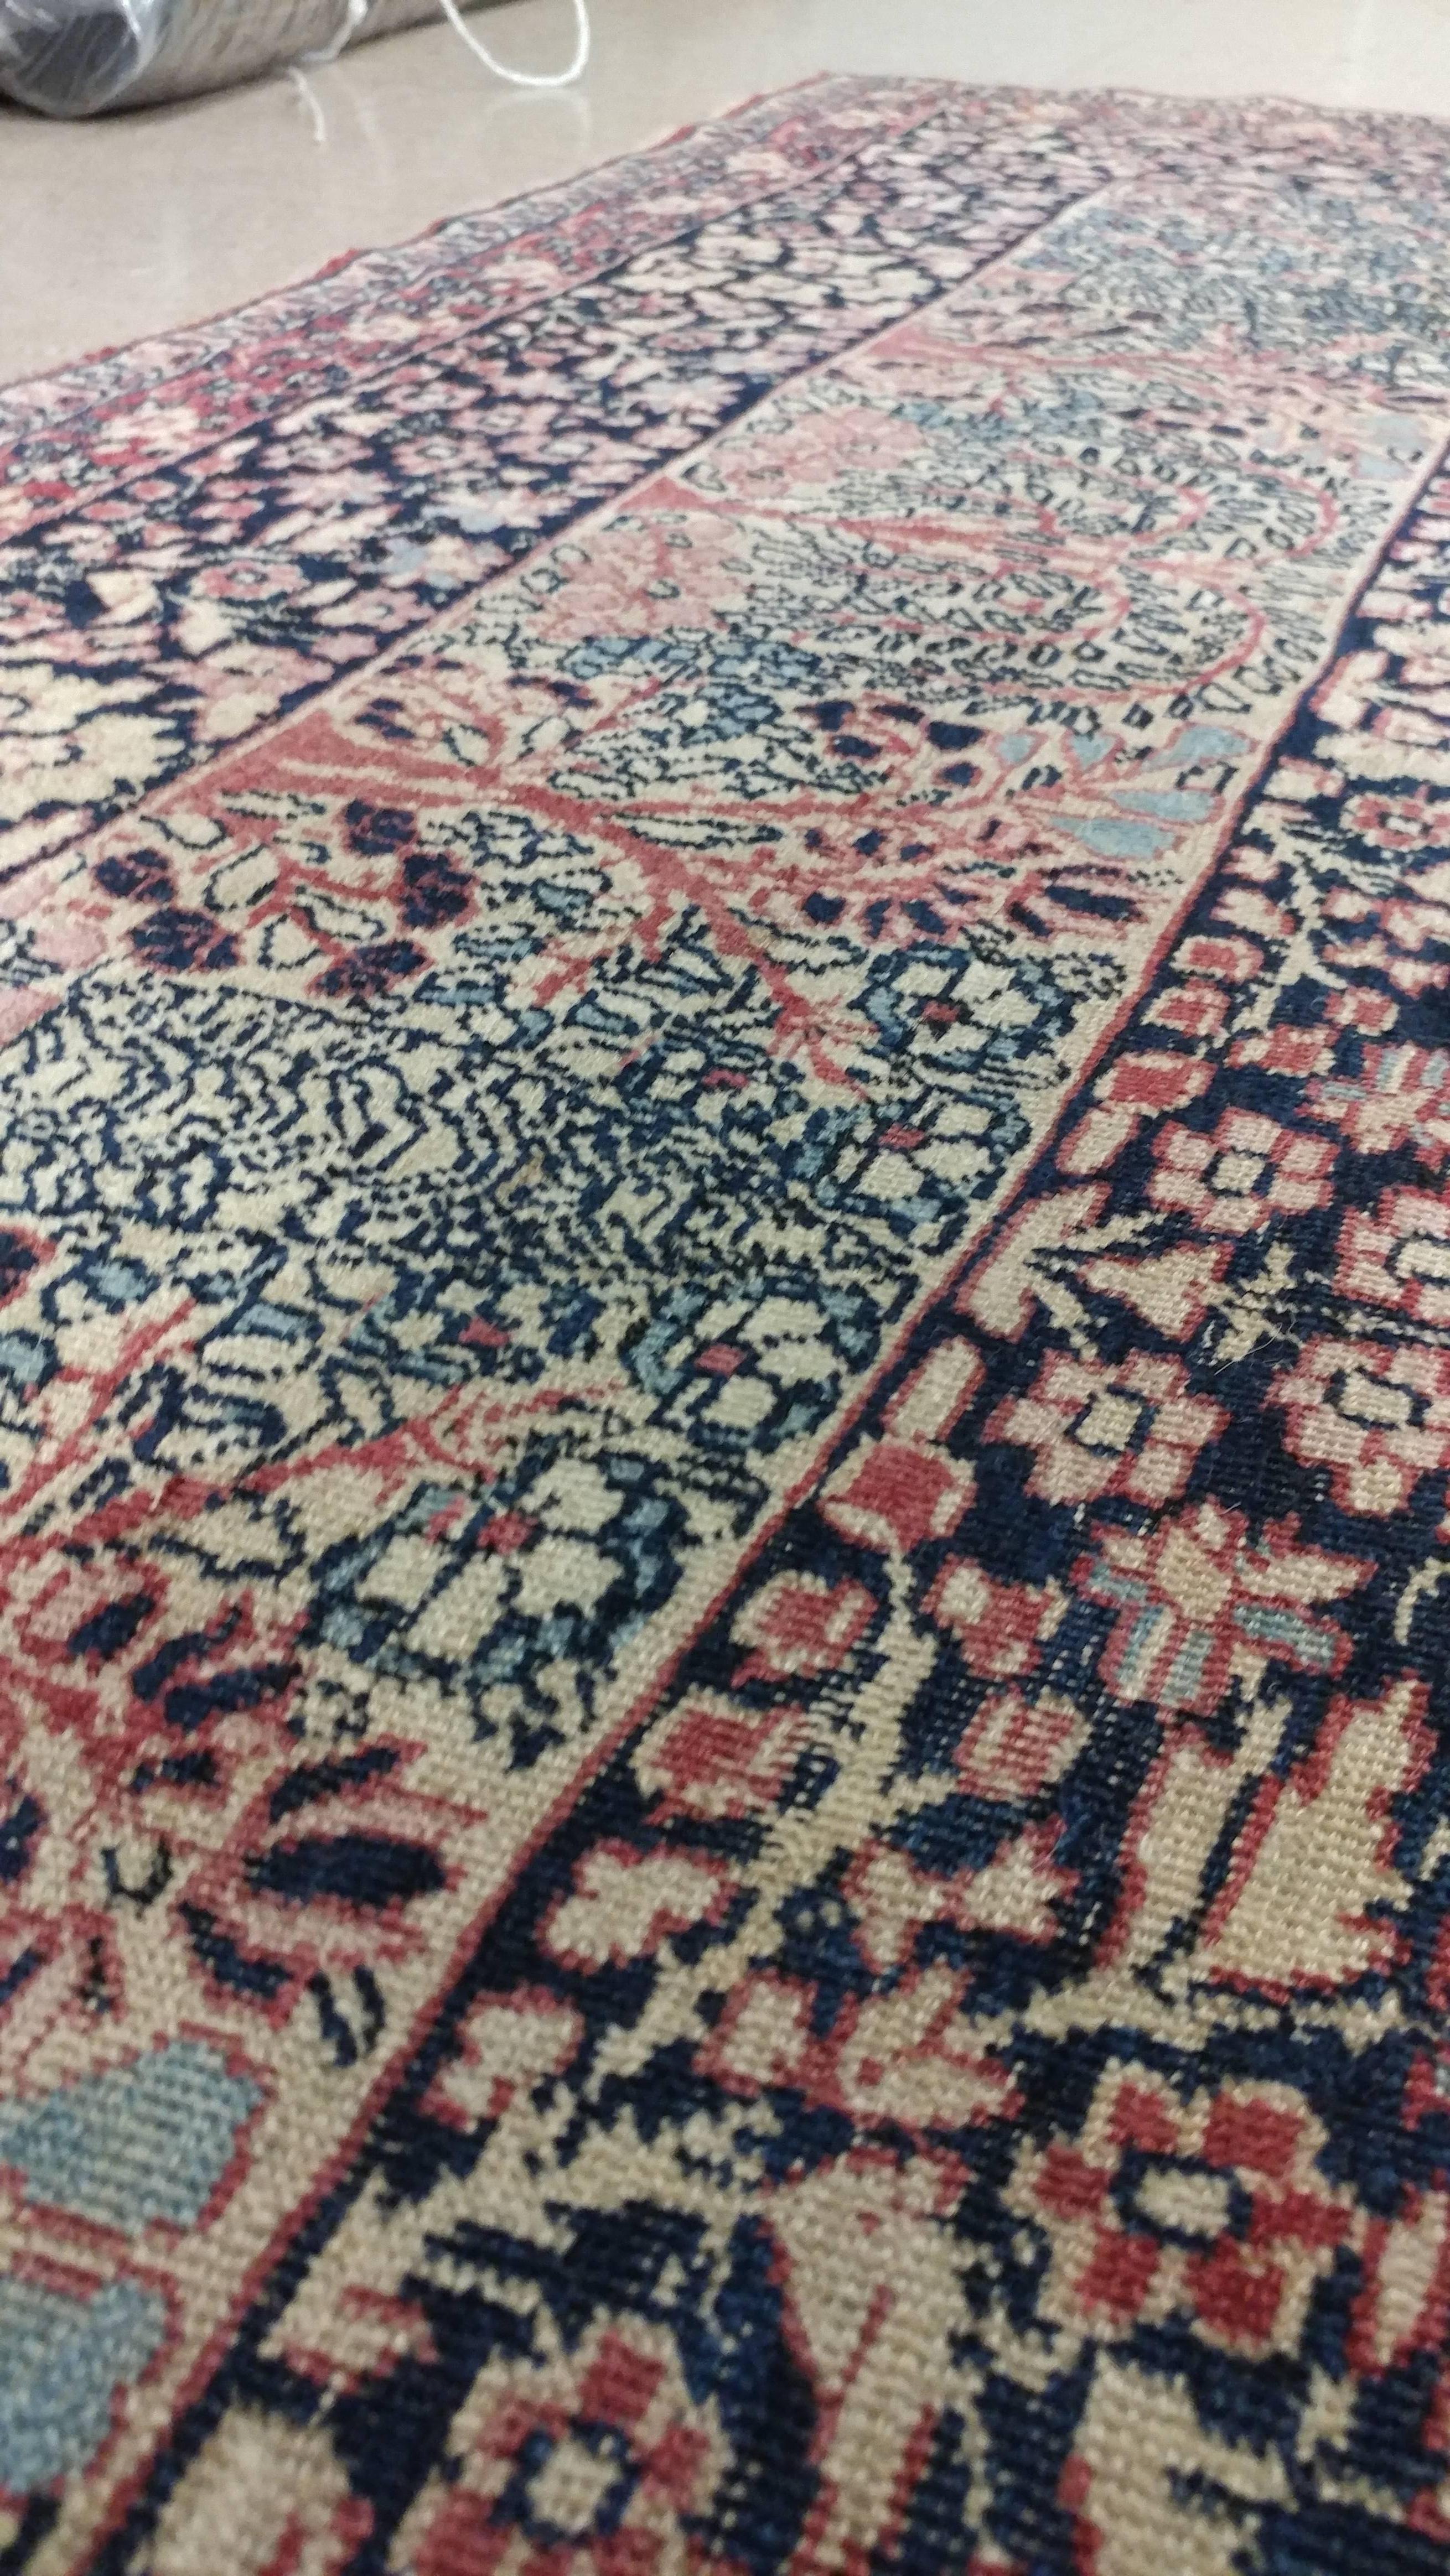 Antique Lavar Kerman Carpet, Handmade Wool Carpet, Multi-Color, Ivory, Red Wine For Sale 2